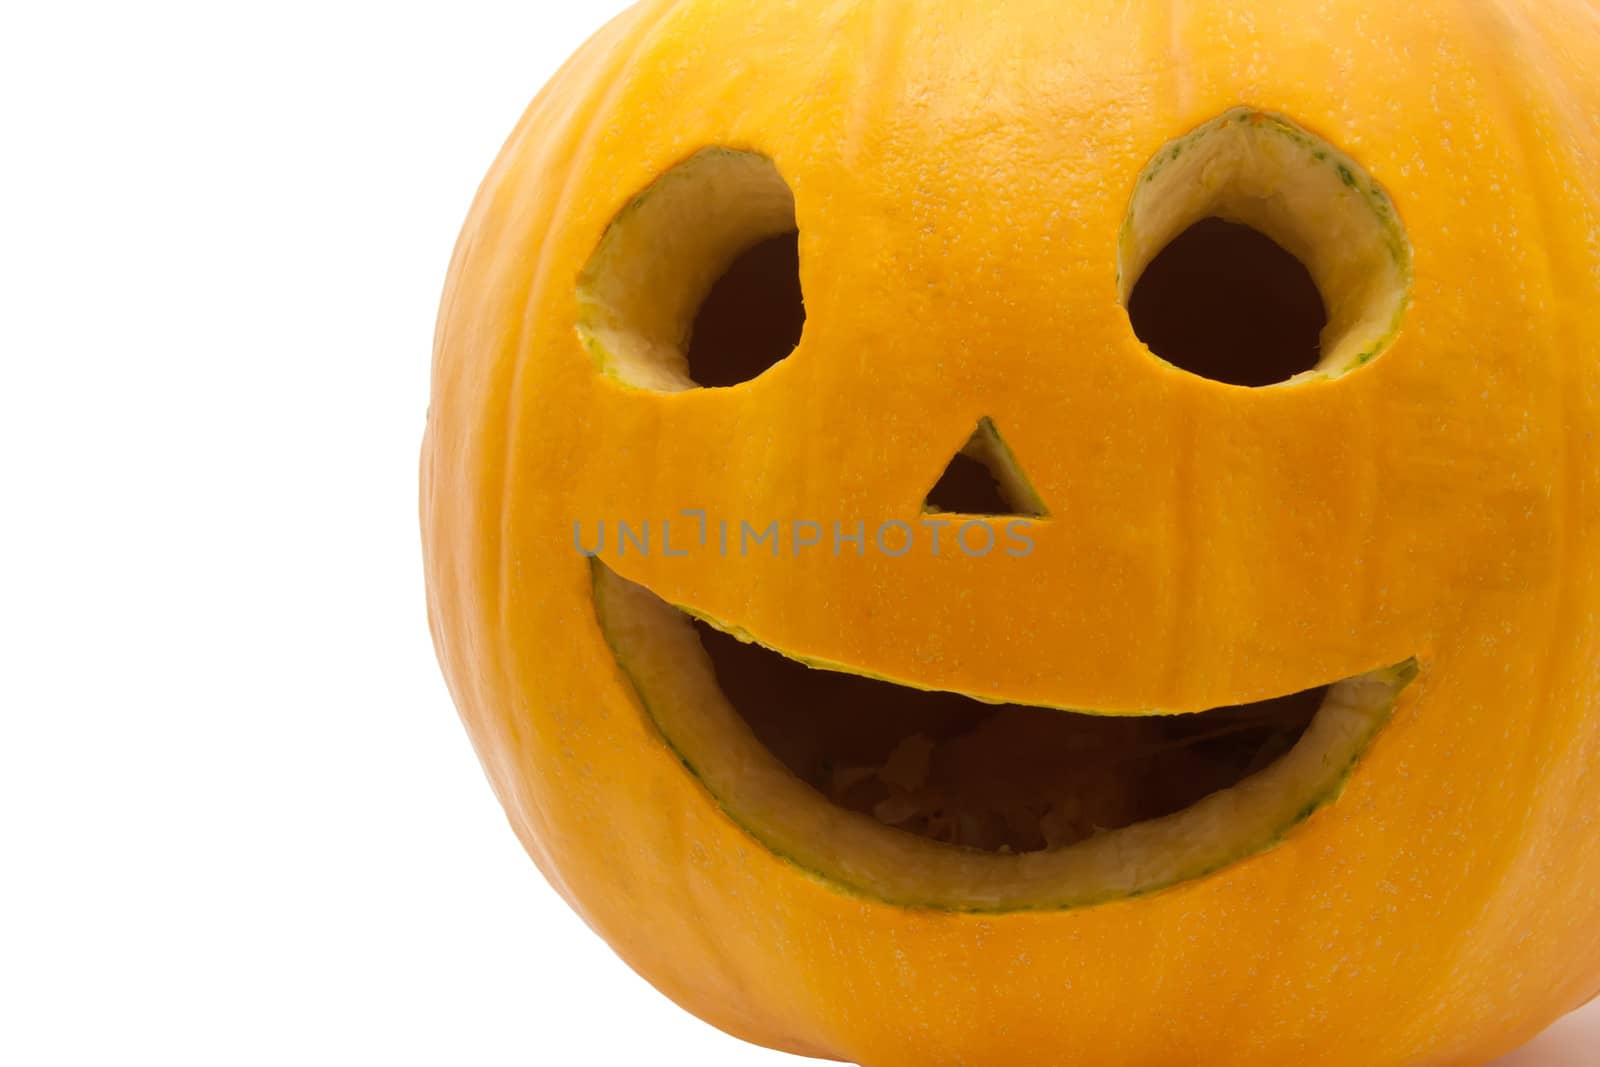 Cute Jack O Lantern halloween pumpkin on white background